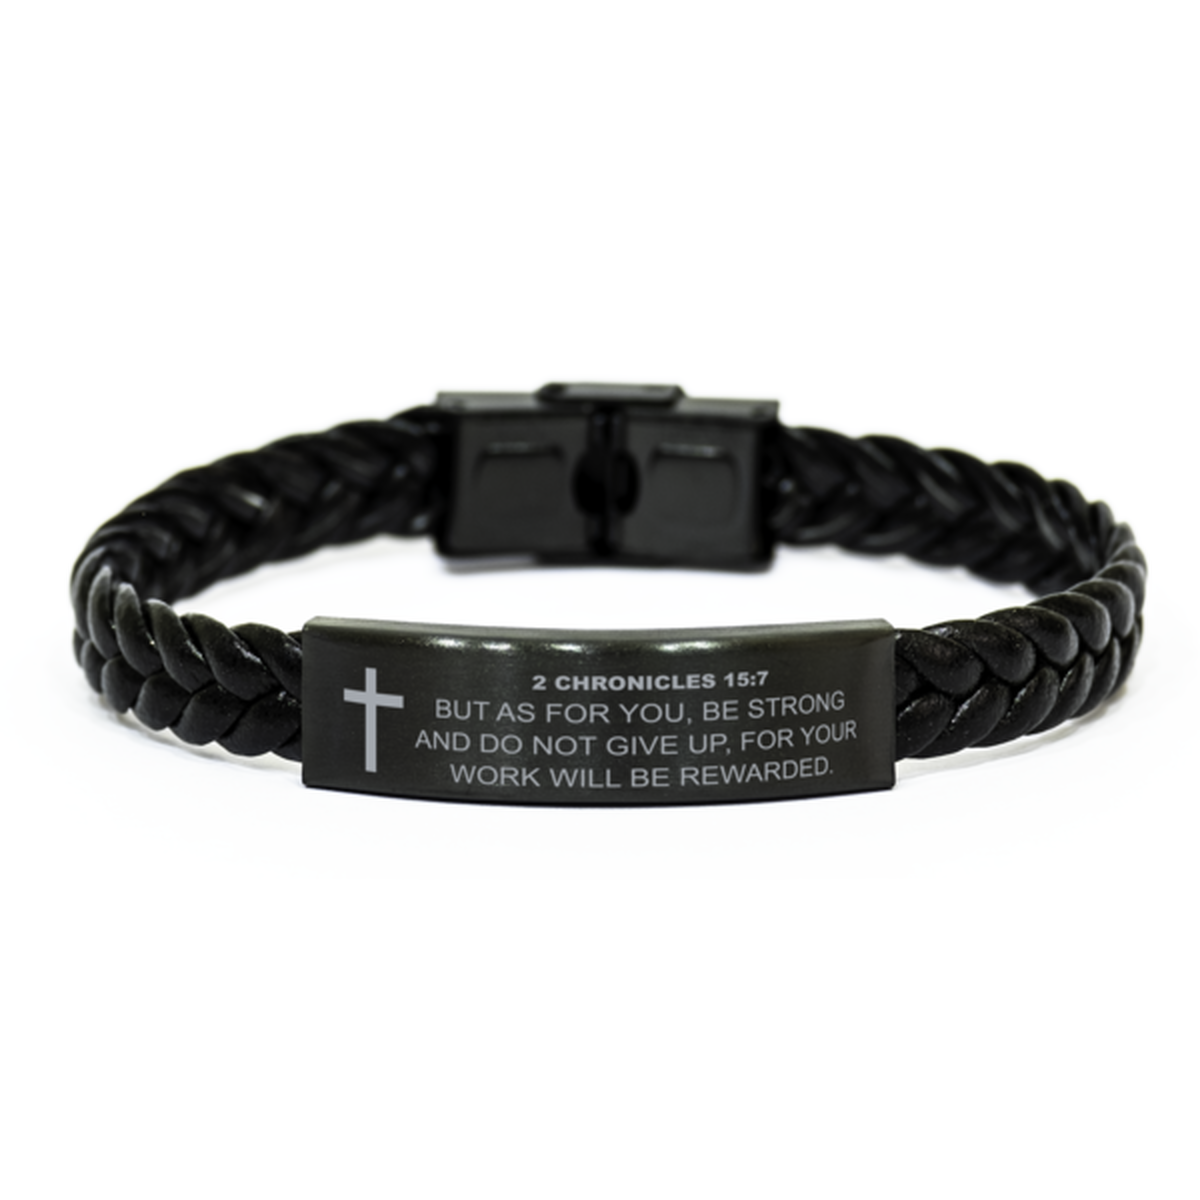 2 Chronicles 15:7 Bracelet, Be Strong And Do Not Give Up, Bible Verse Bracelet, Christian Bracelet, Braided Leather Bracelet, Easter Gift